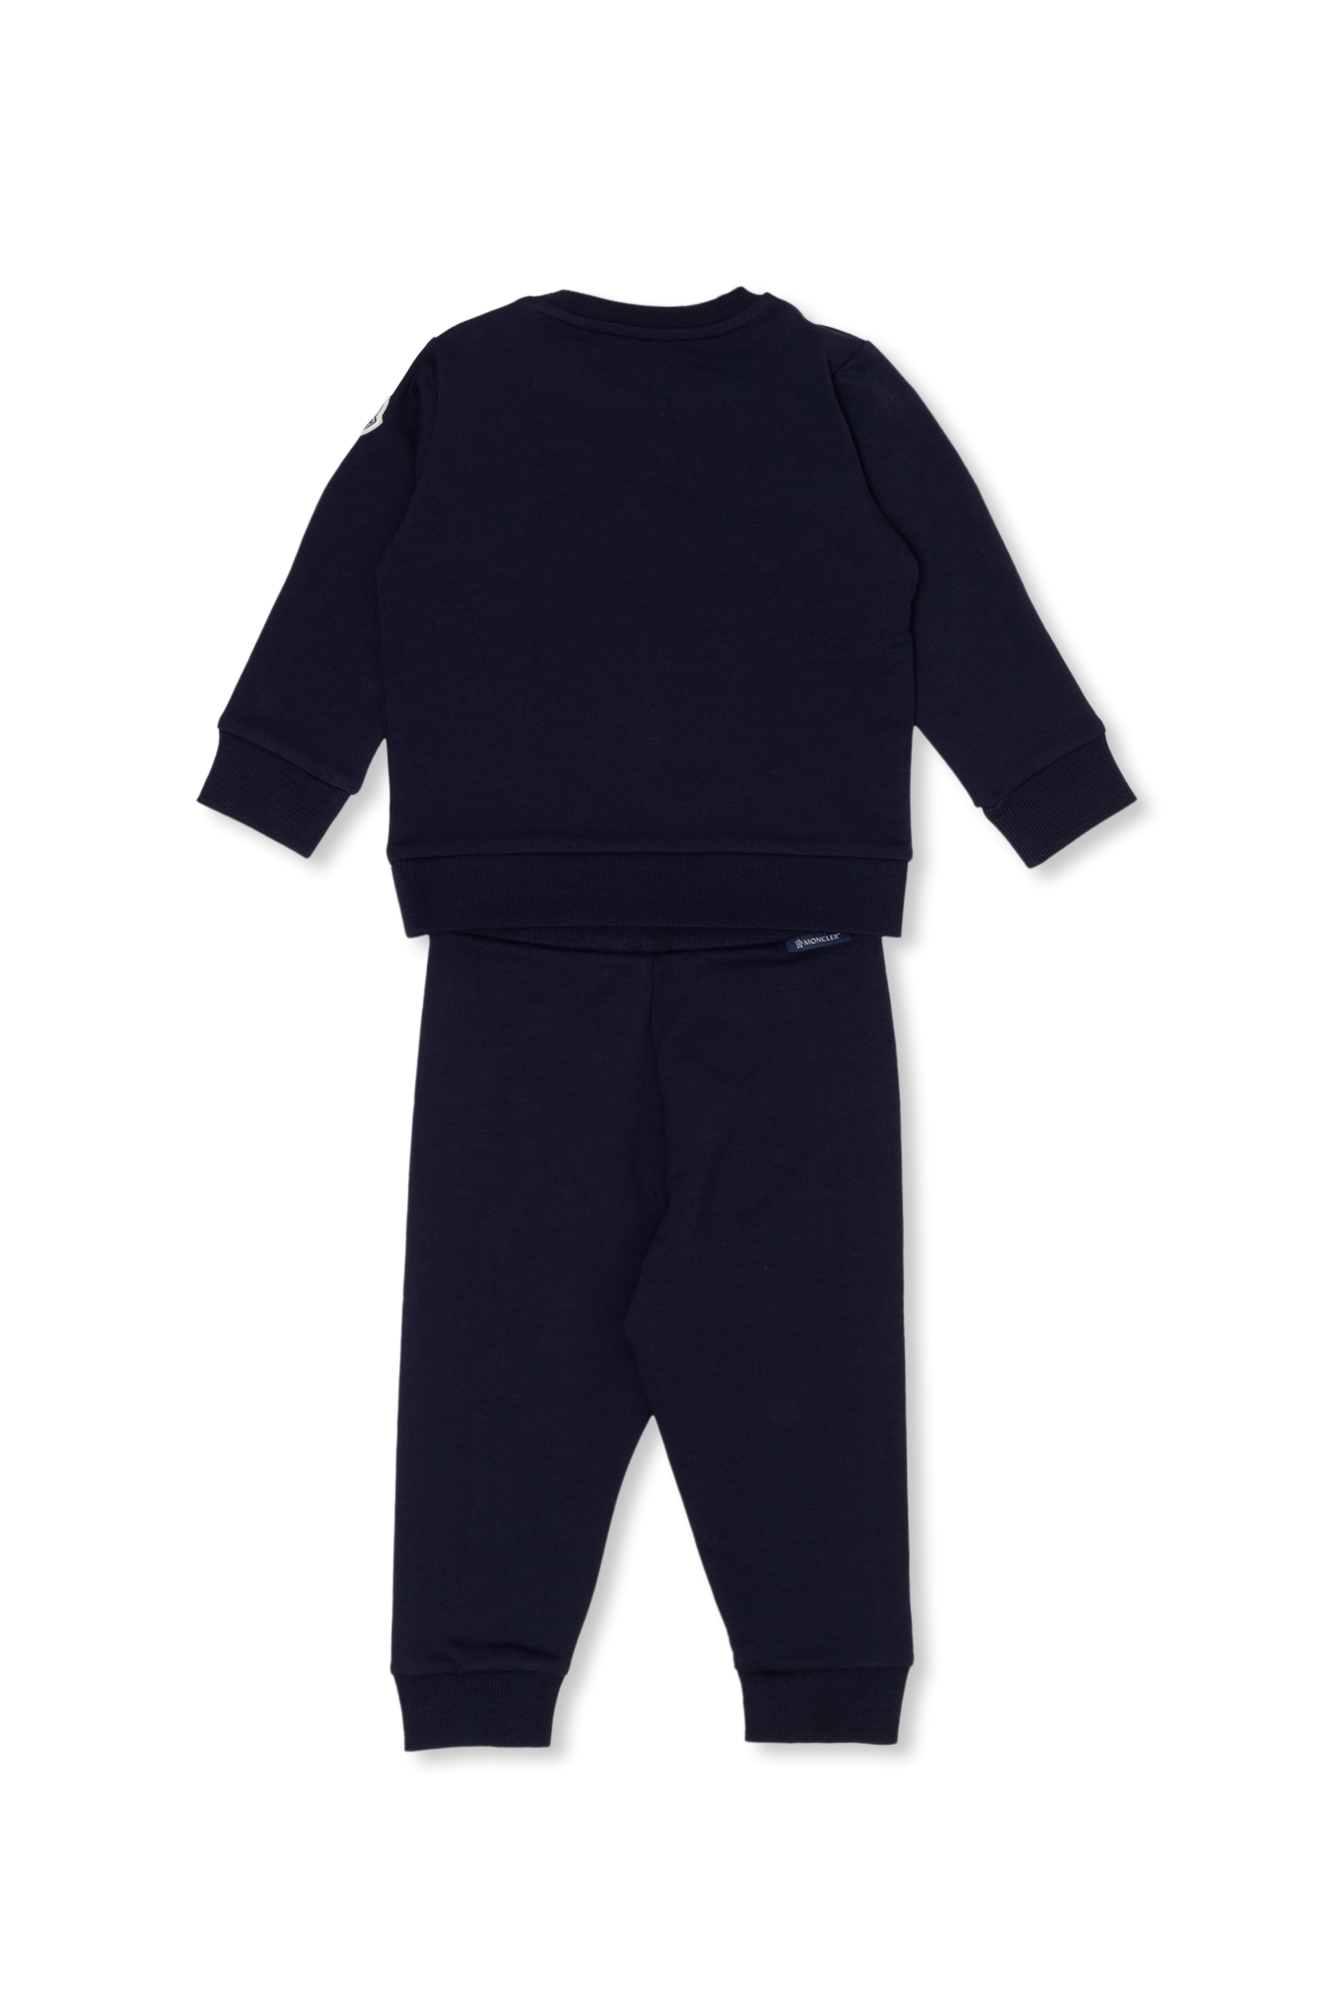 Moncler Enfant Sweatshirt & sweatpants set